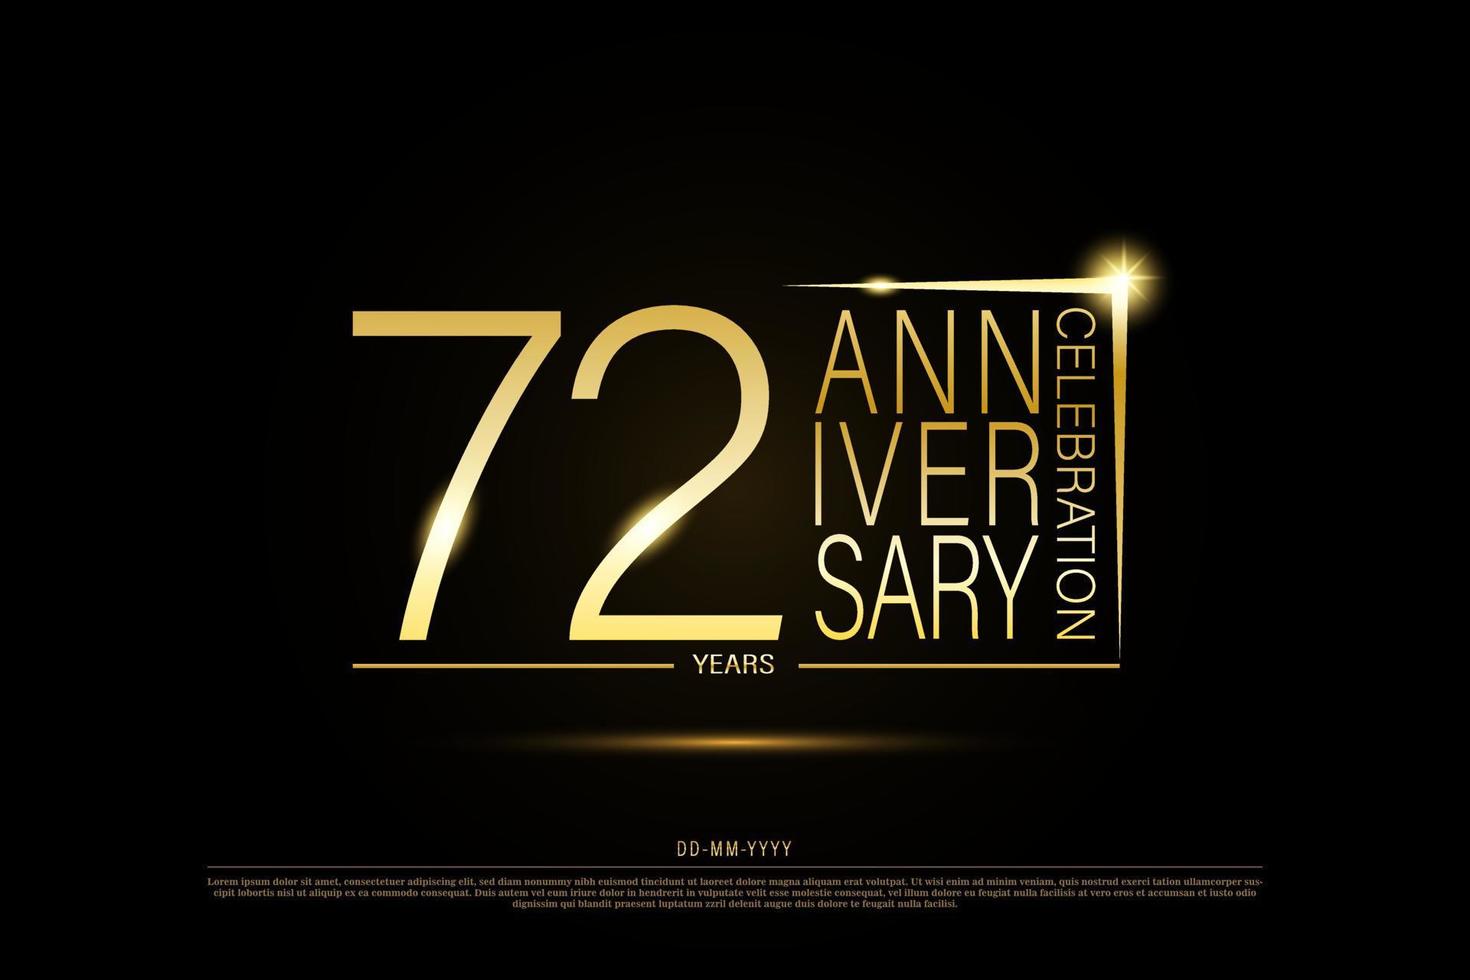 72 years golden anniversary gold logo on black background, vector design for celebration